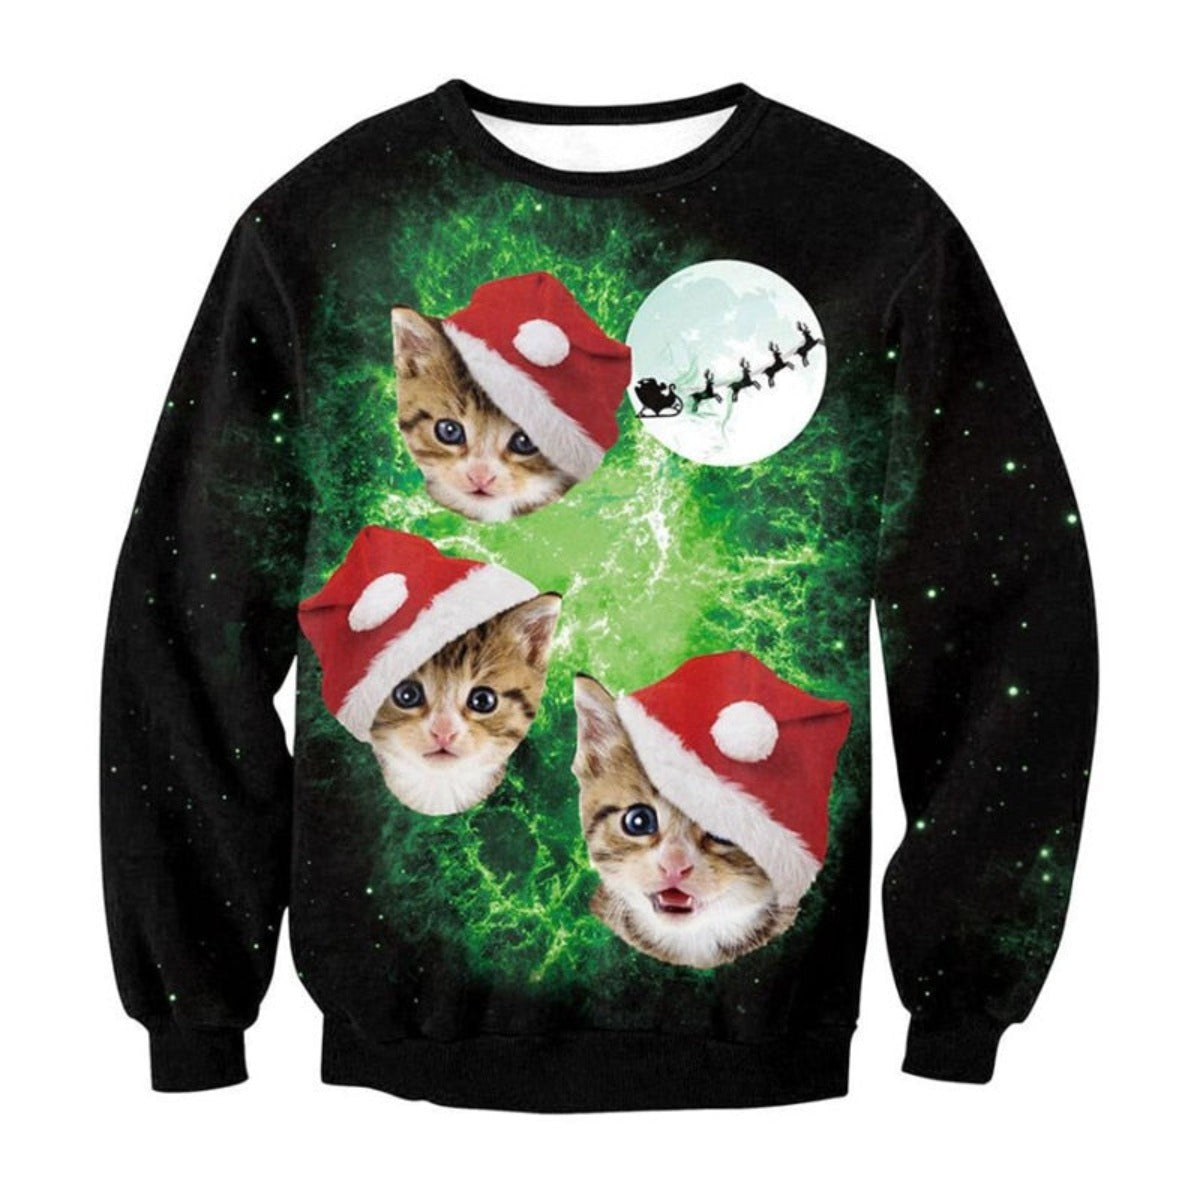 Santa Kittens Ugly Christmas Sweater